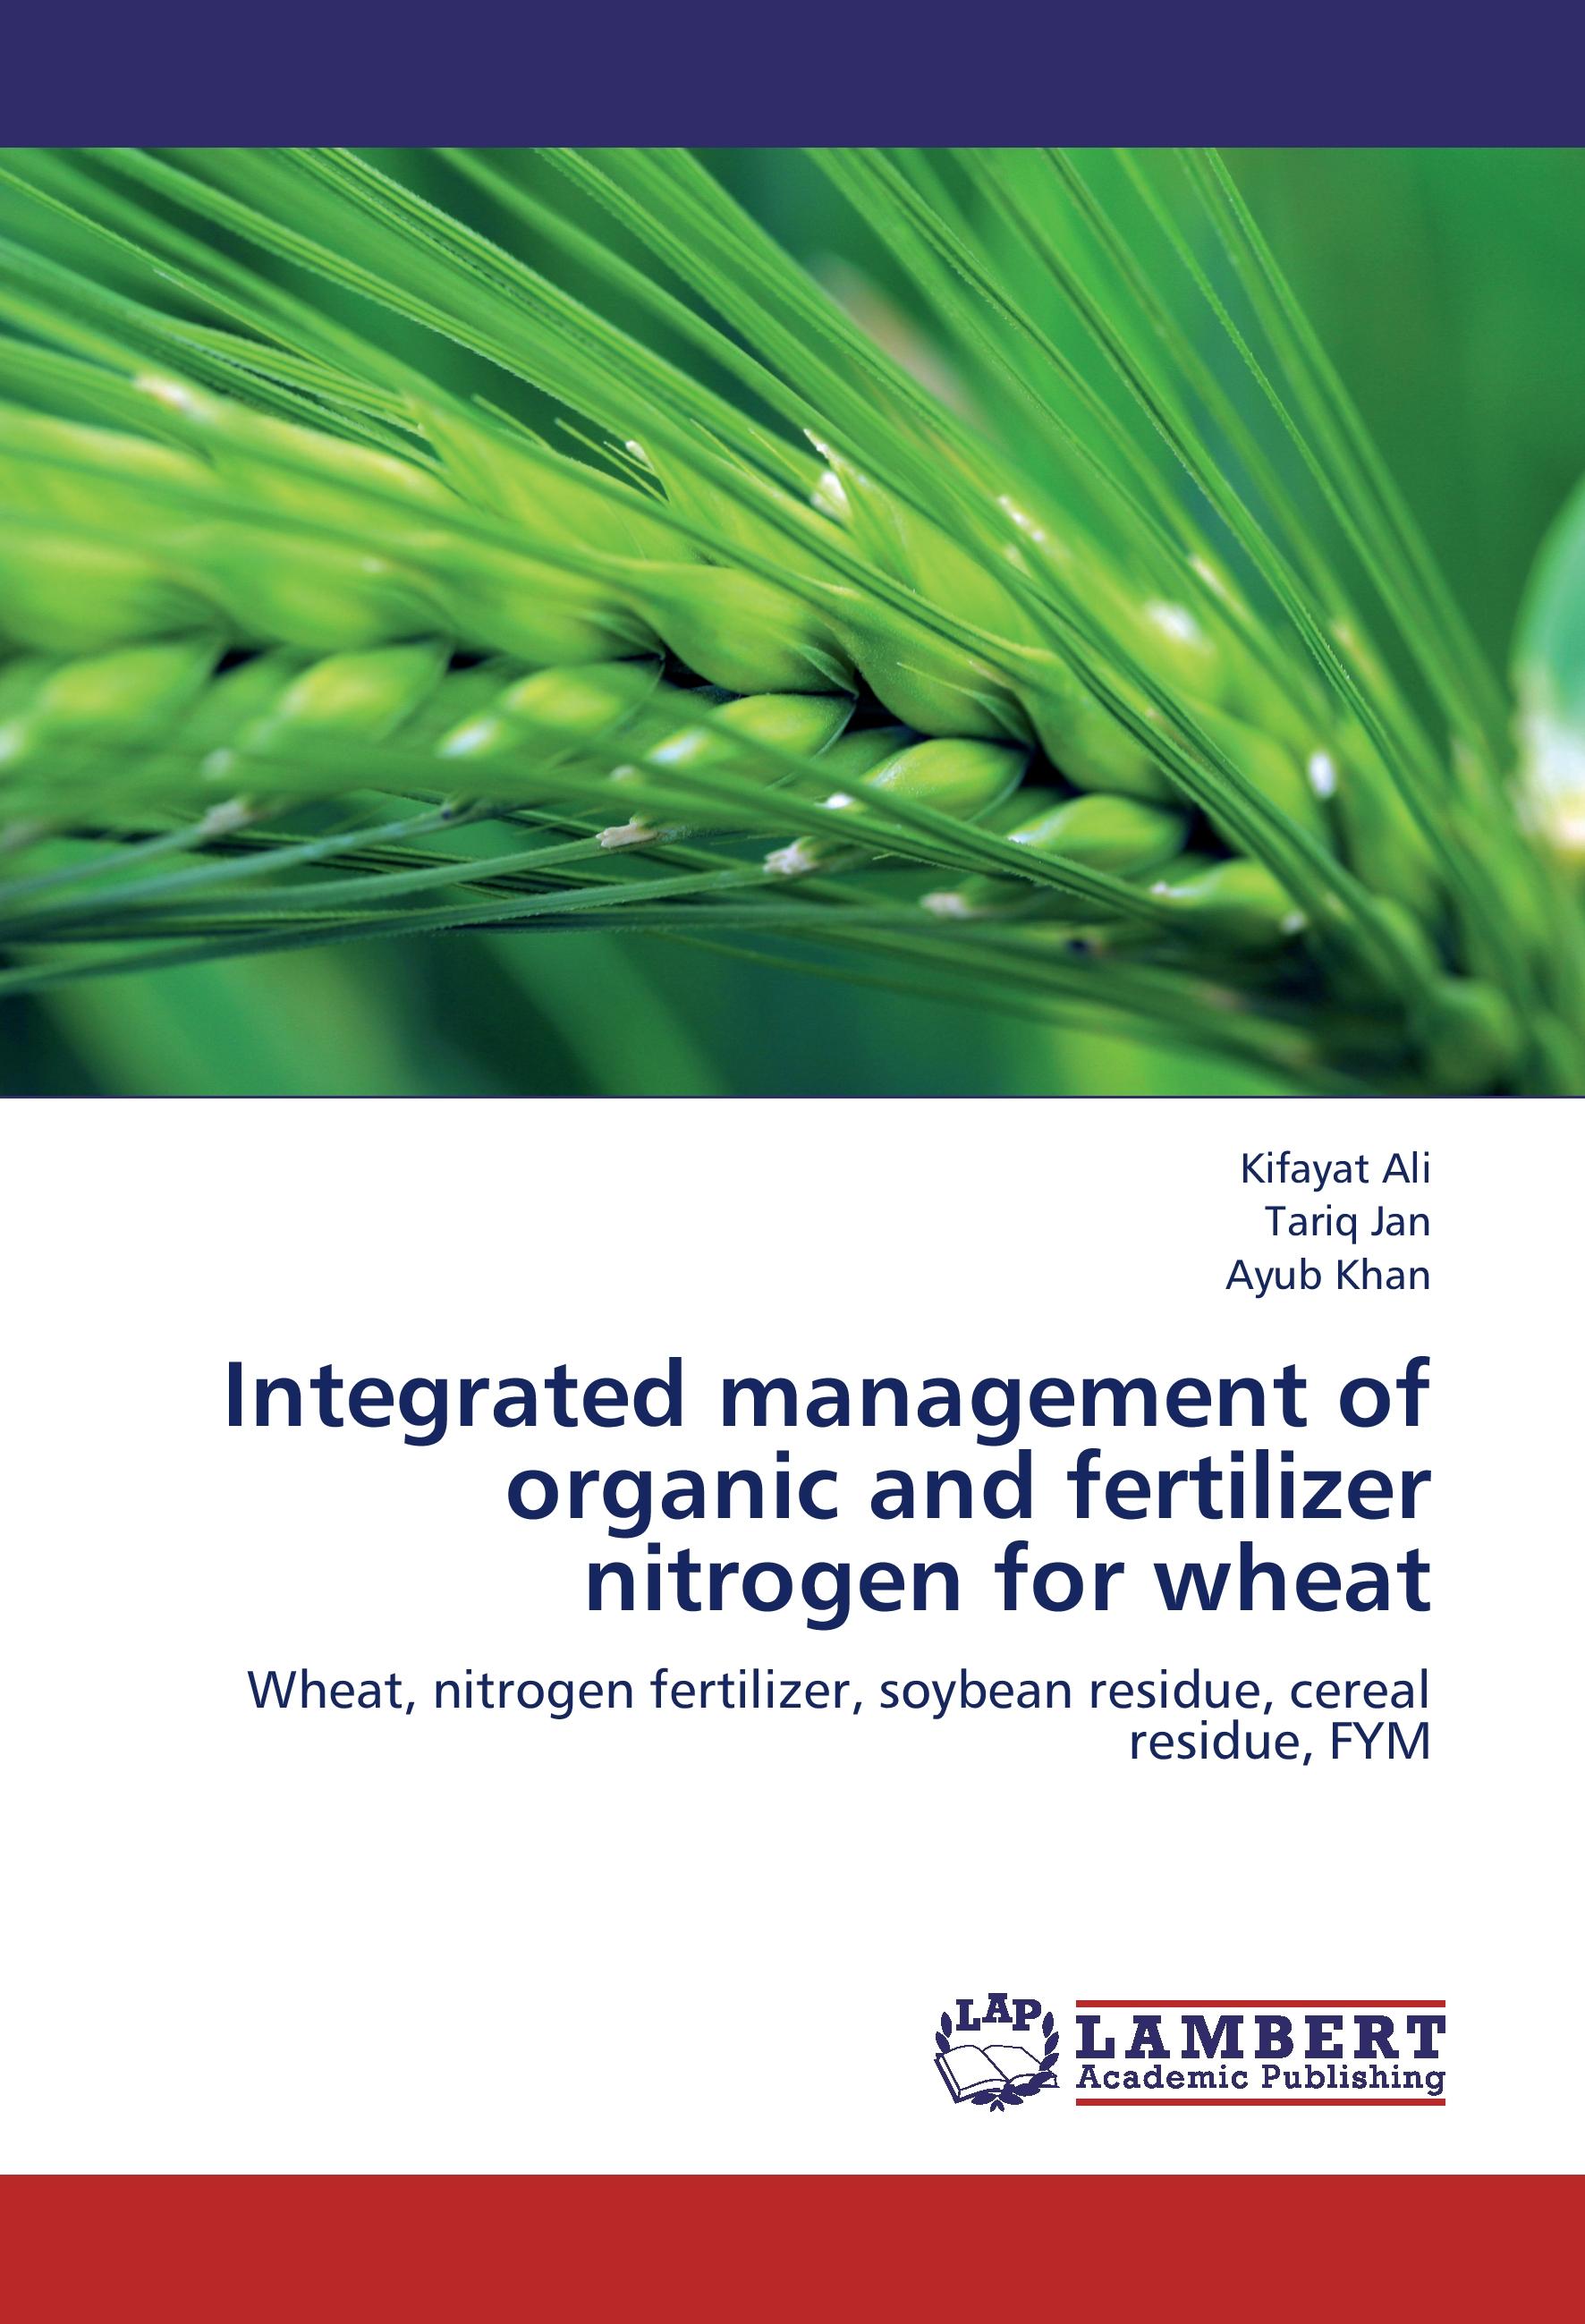 Integrated management of organic and fertilizer nitrogen for wheat - Kifayat Ali Tariq Jan AYUB KHAN